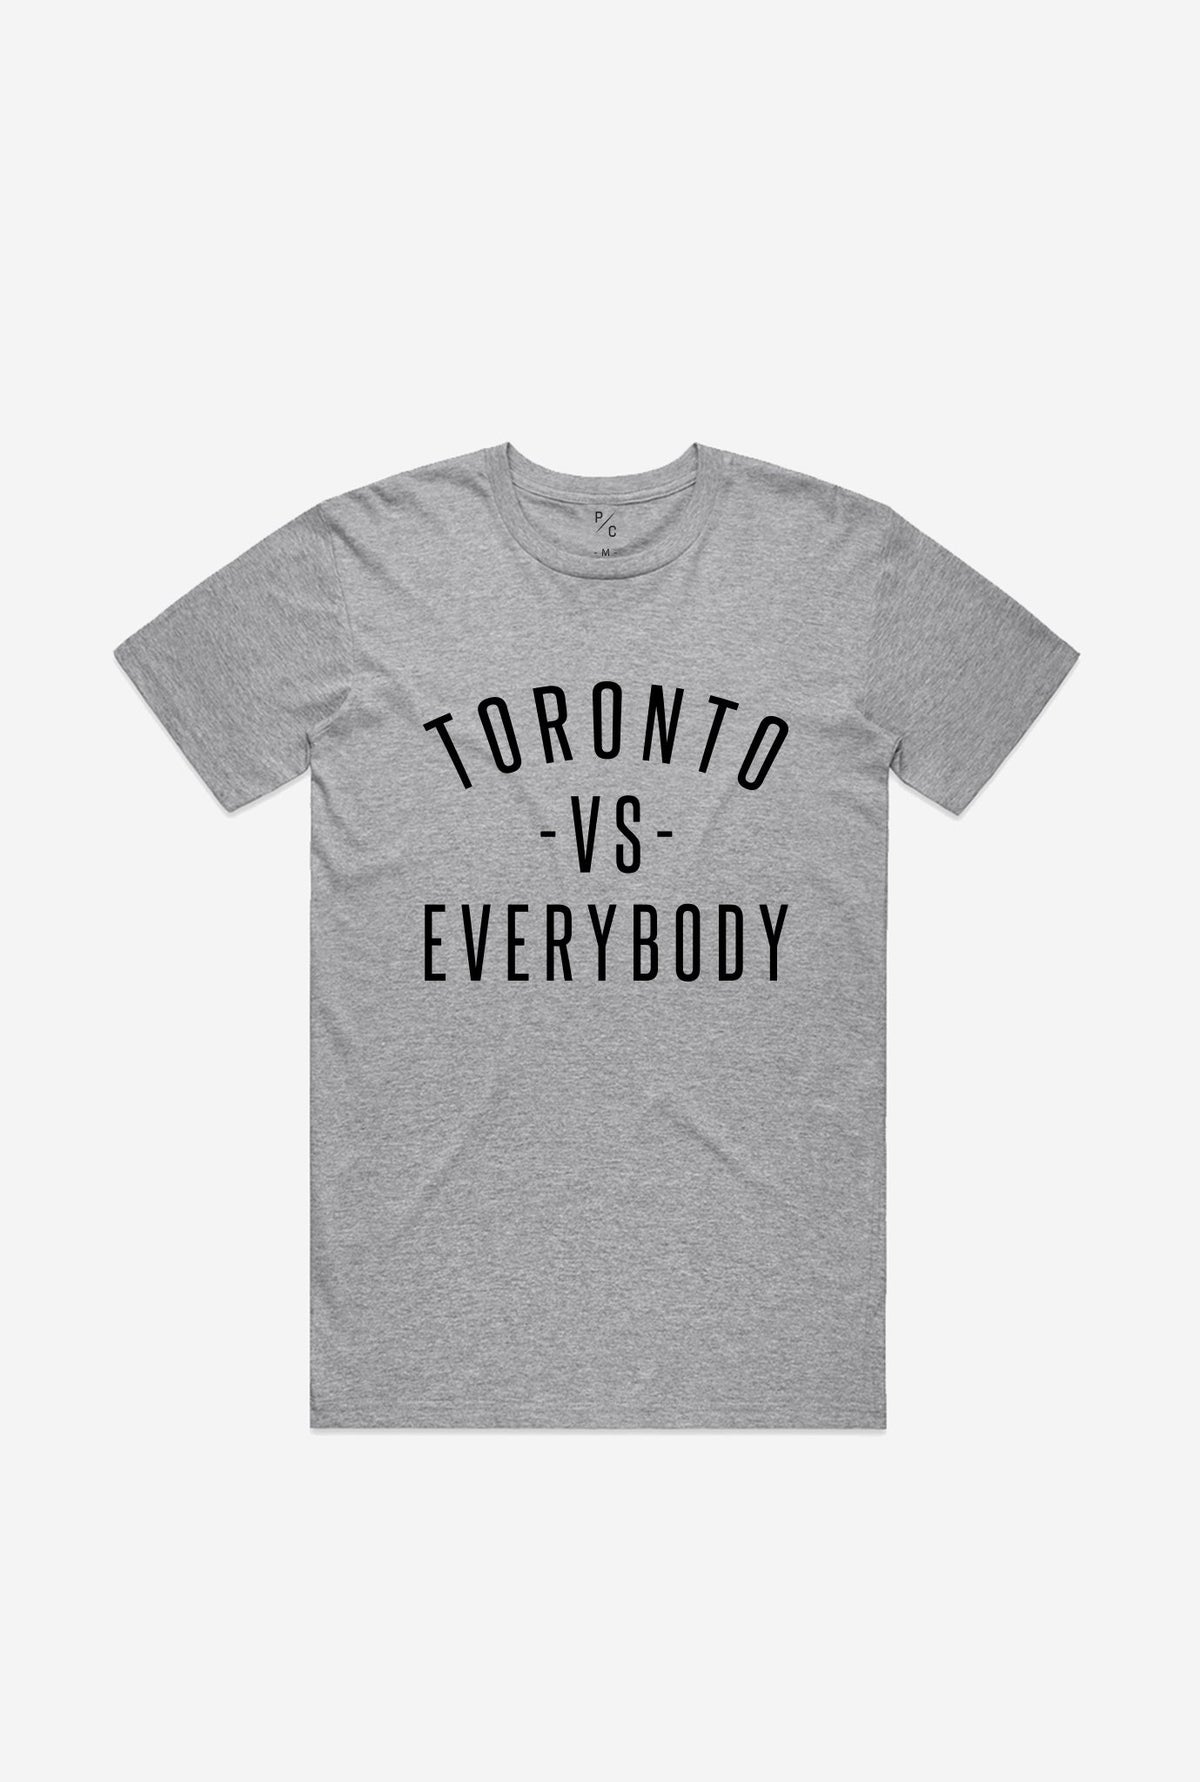 Toronto -vs- Everybody® T-Shirt - Grey